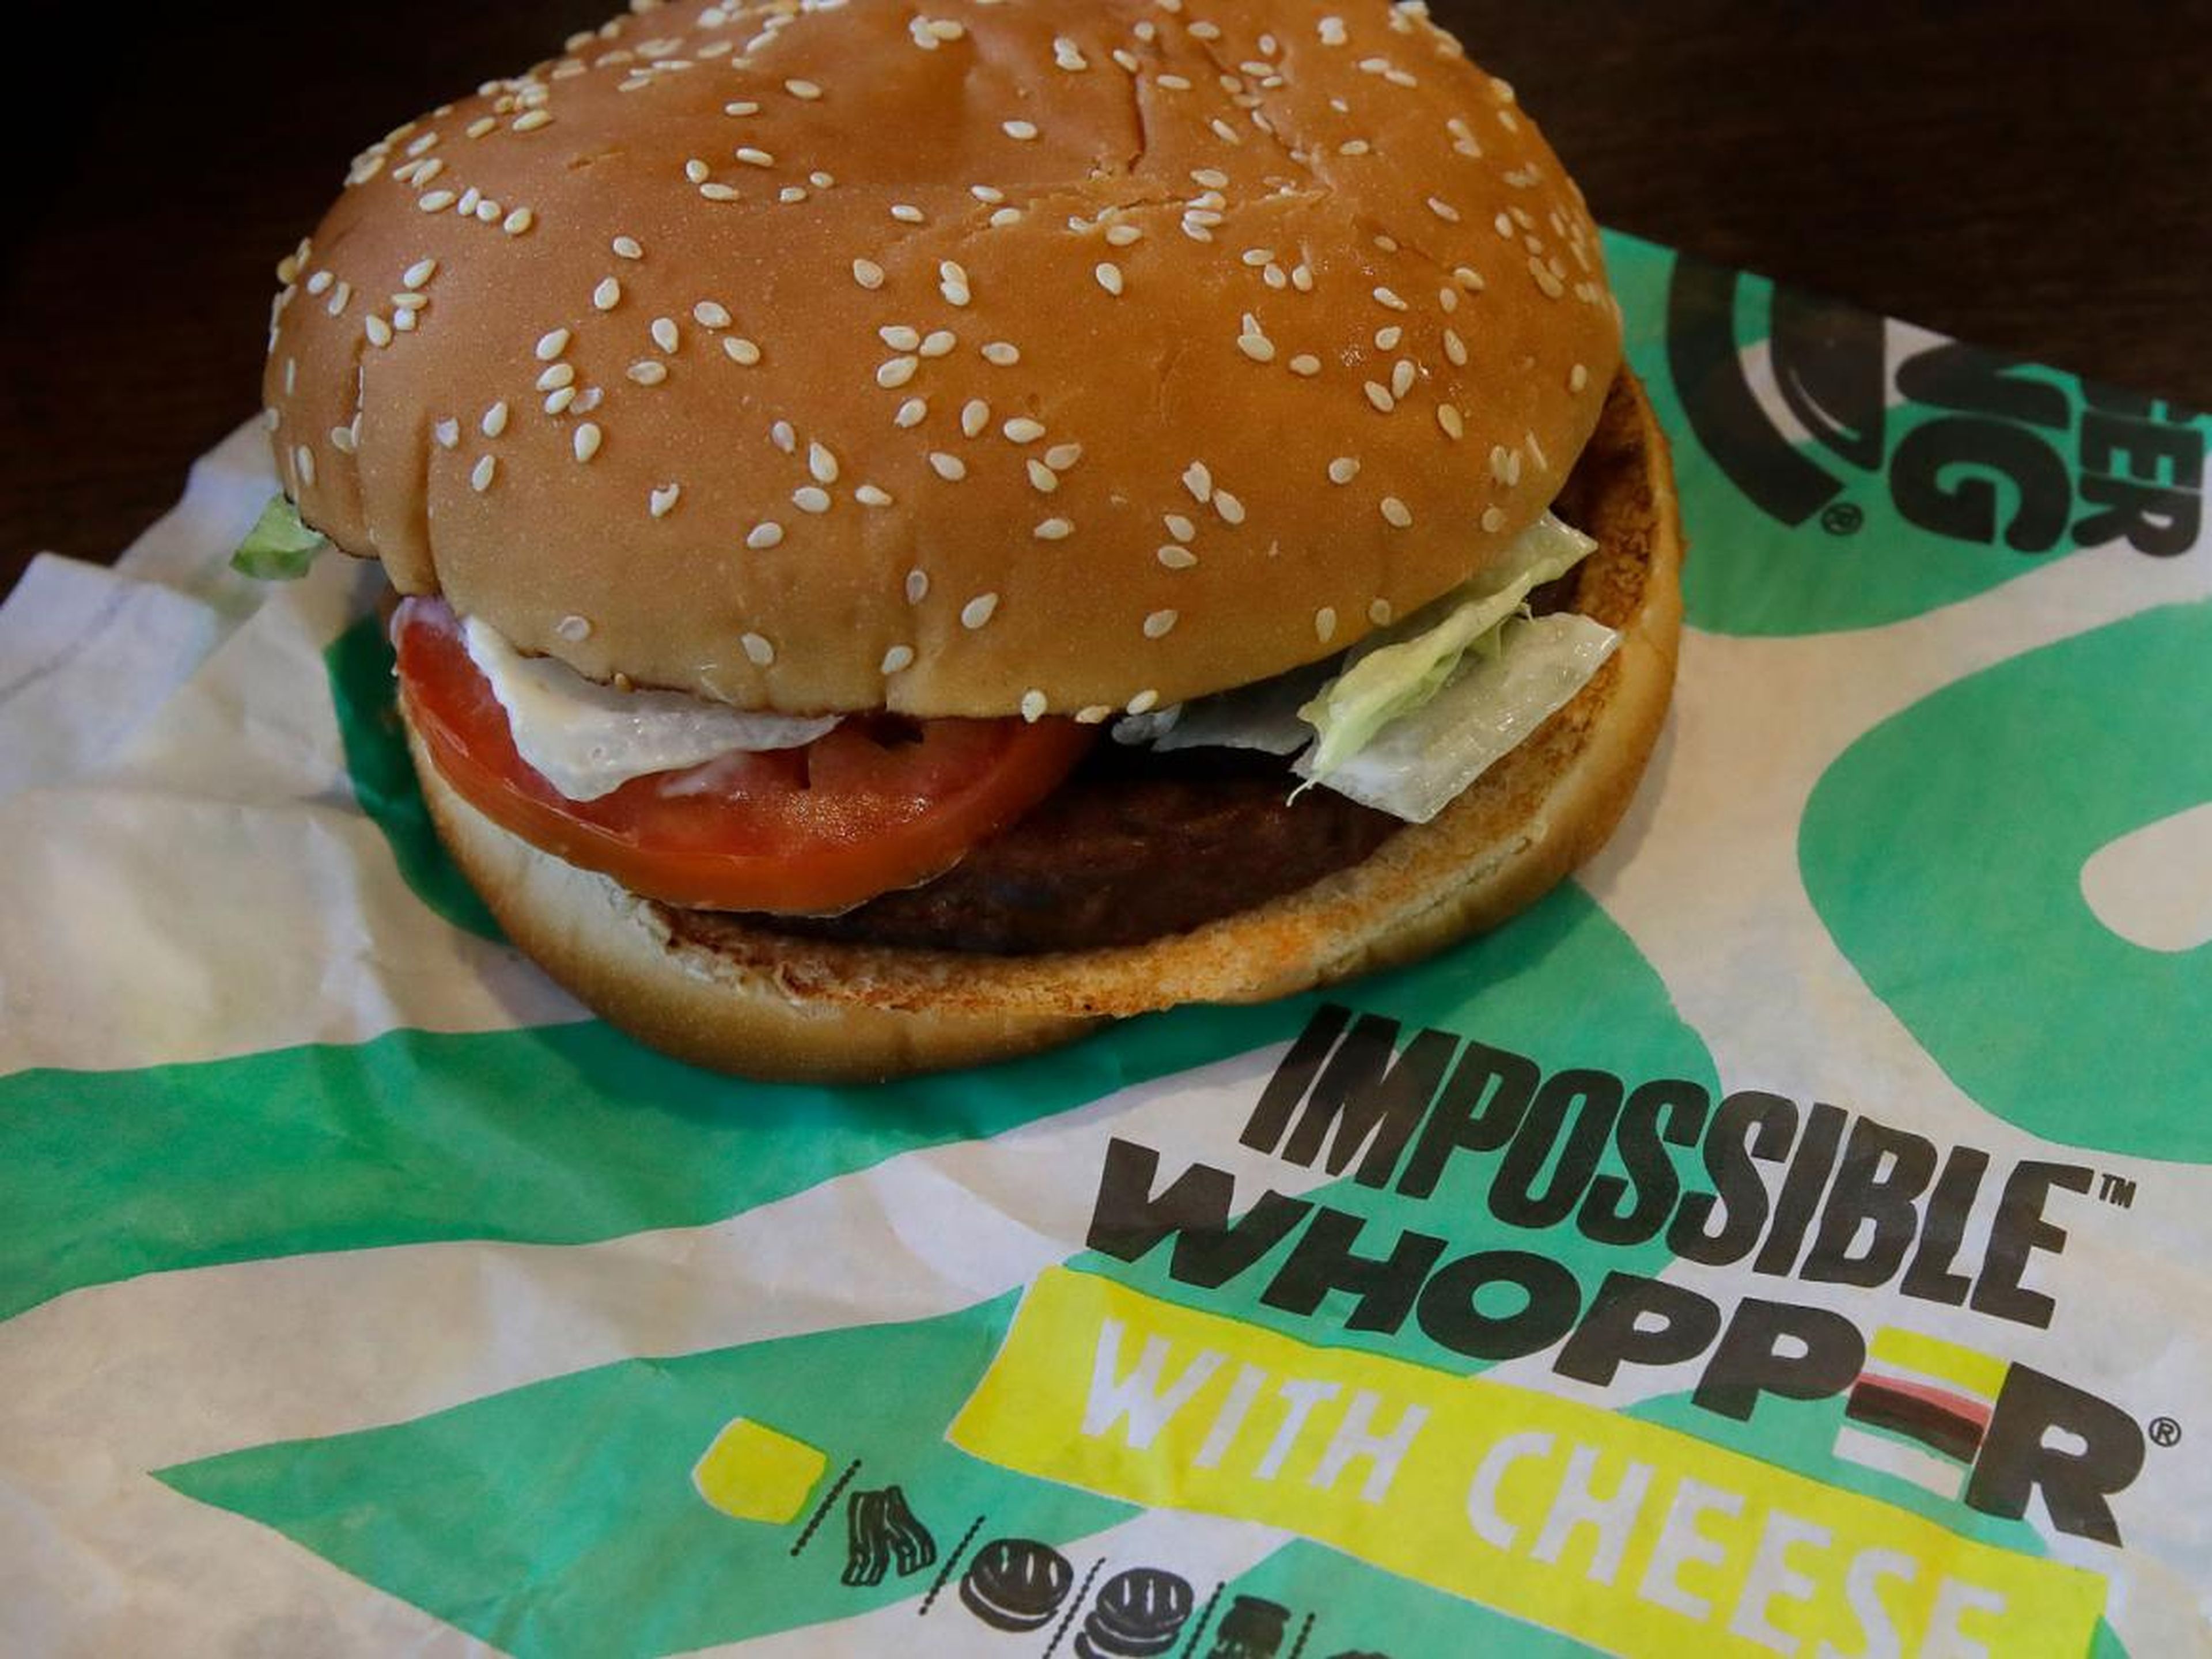 La Impossible Whopper de Burger King, hecha con una alternativa cárnica de origen vegetal.